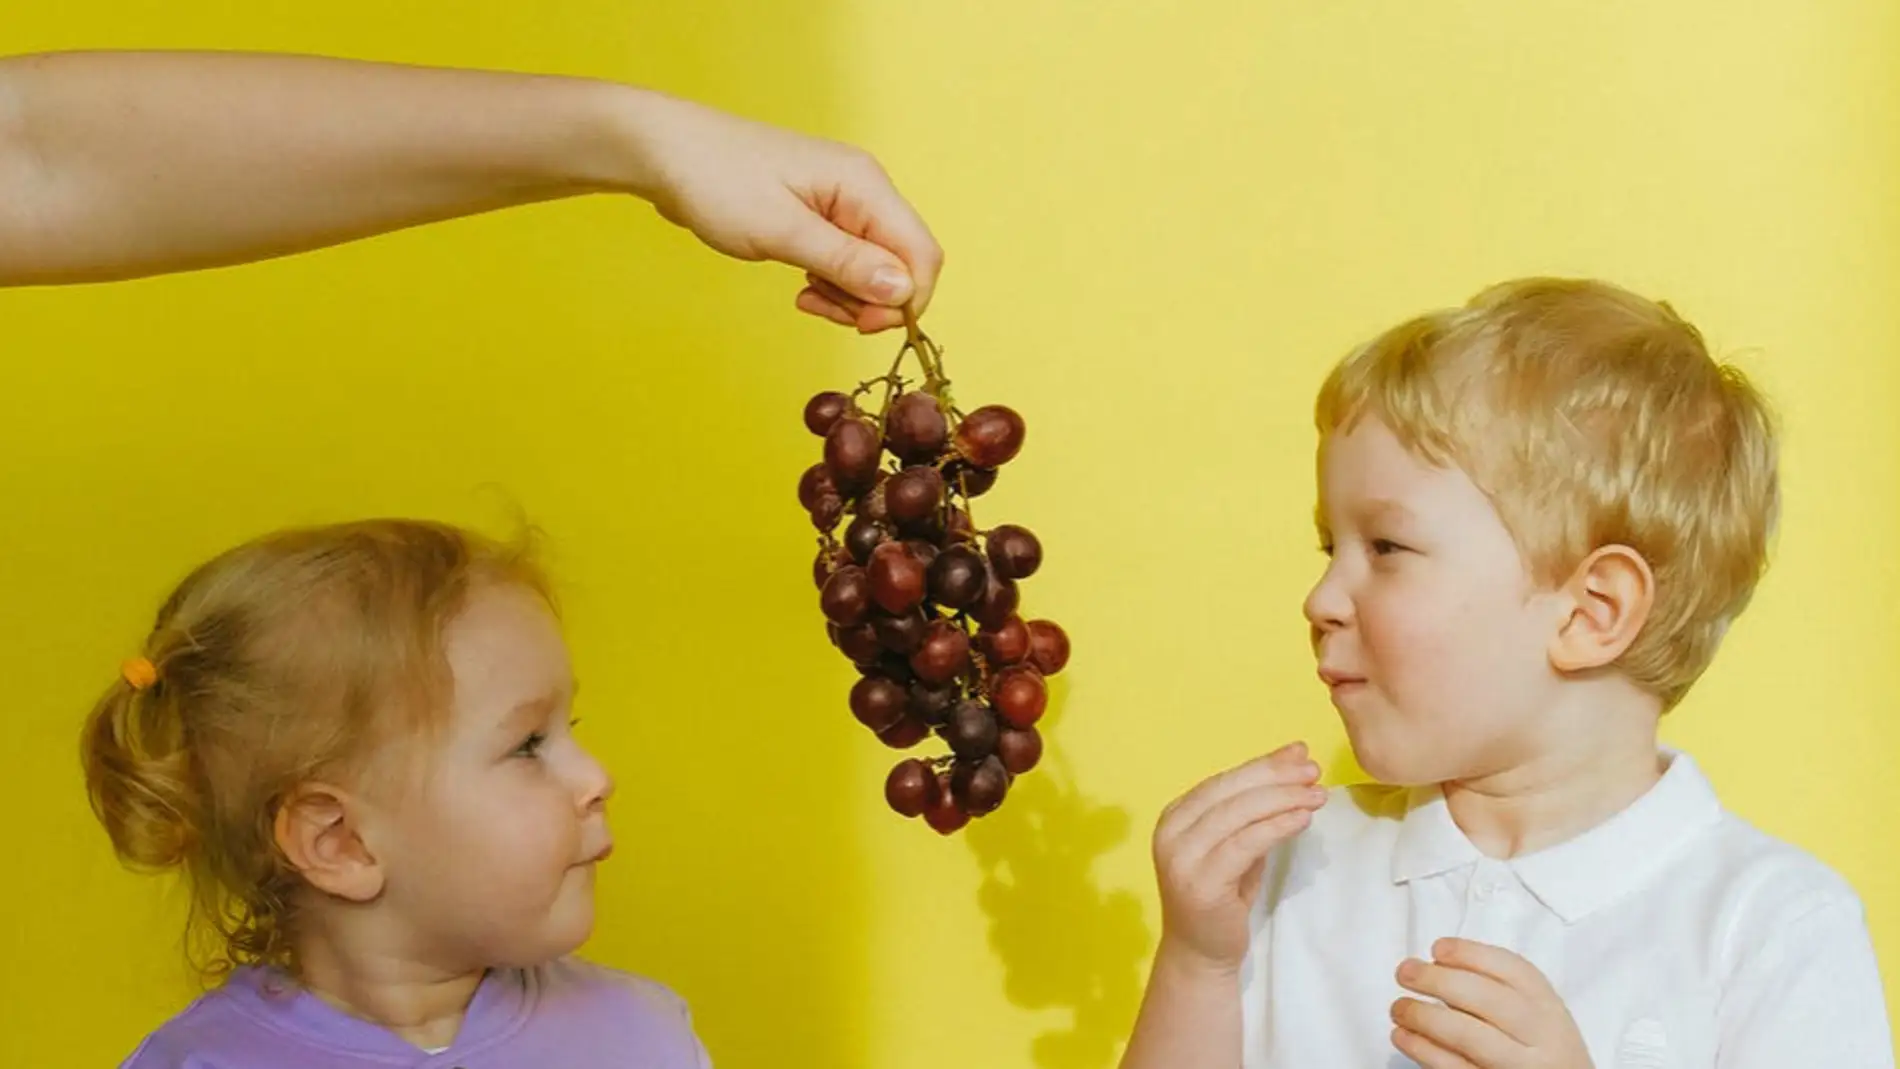 La SEORL-CCC advierte del riesgo de asfixia por las uvas de Nochevieja